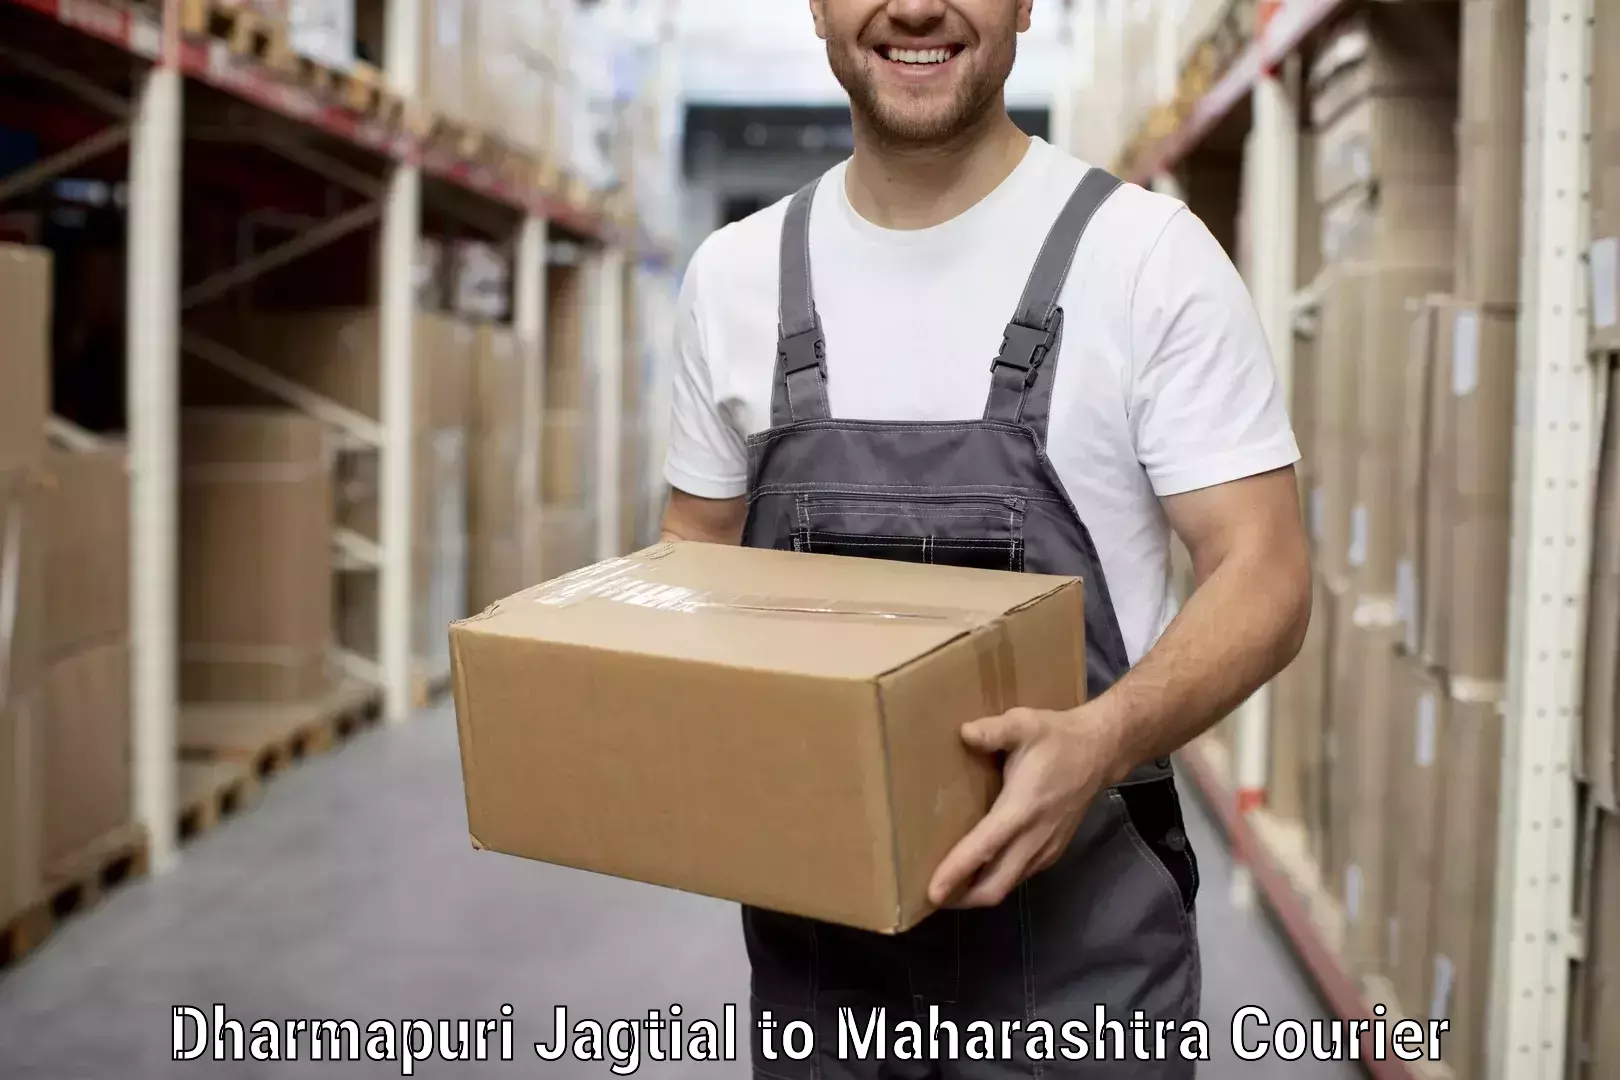 Moving and handling services Dharmapuri Jagtial to Bhiwandi